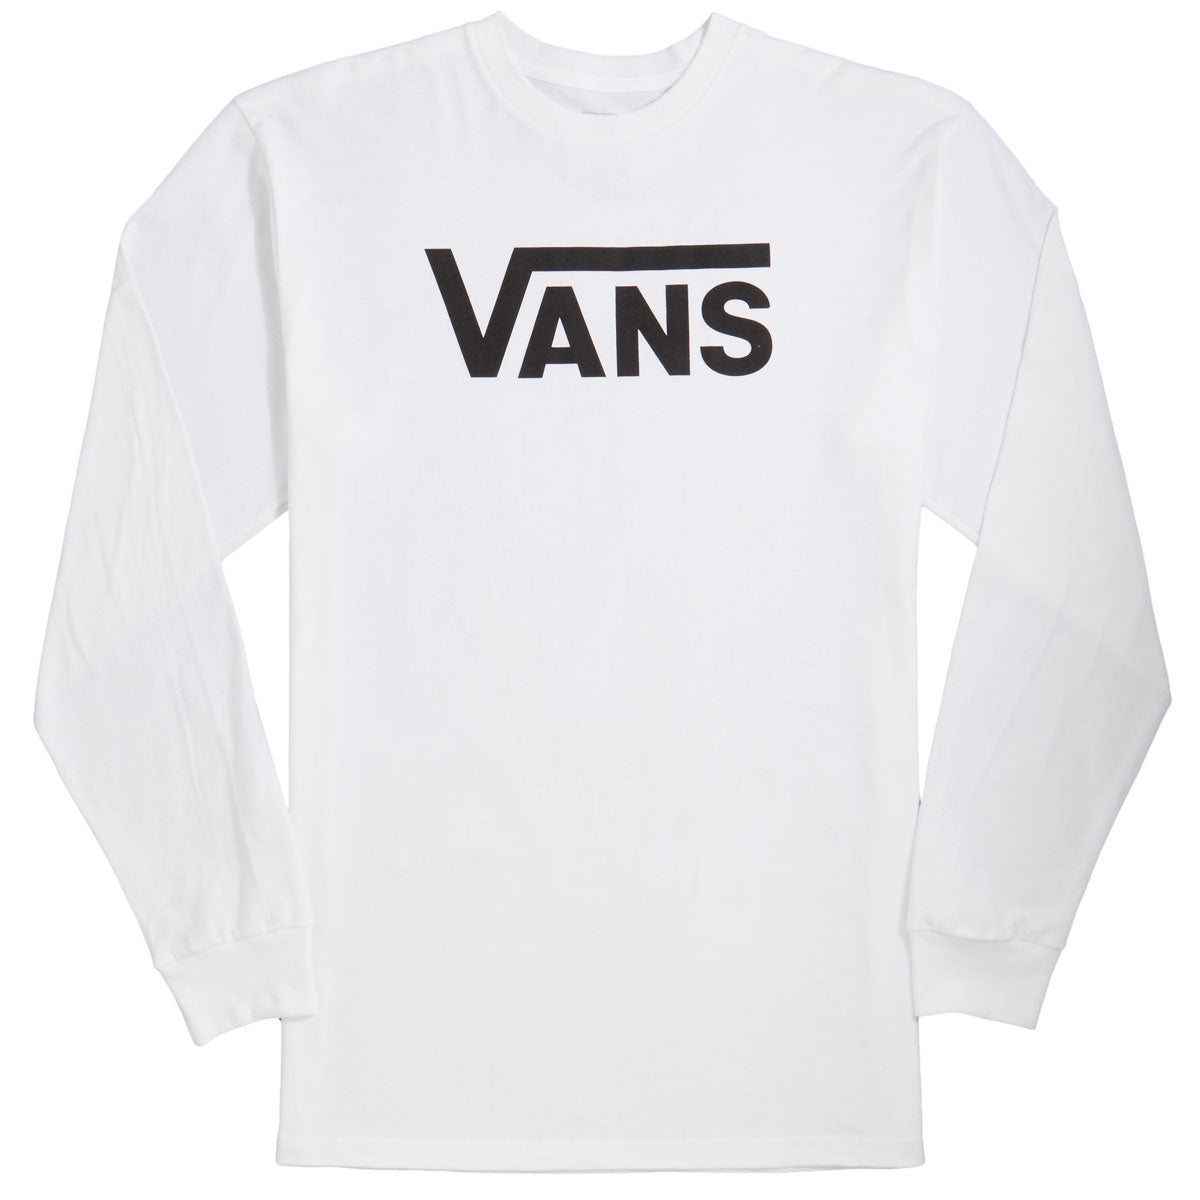 Vans Classic Long Sleeve T-Shirt - White/Black